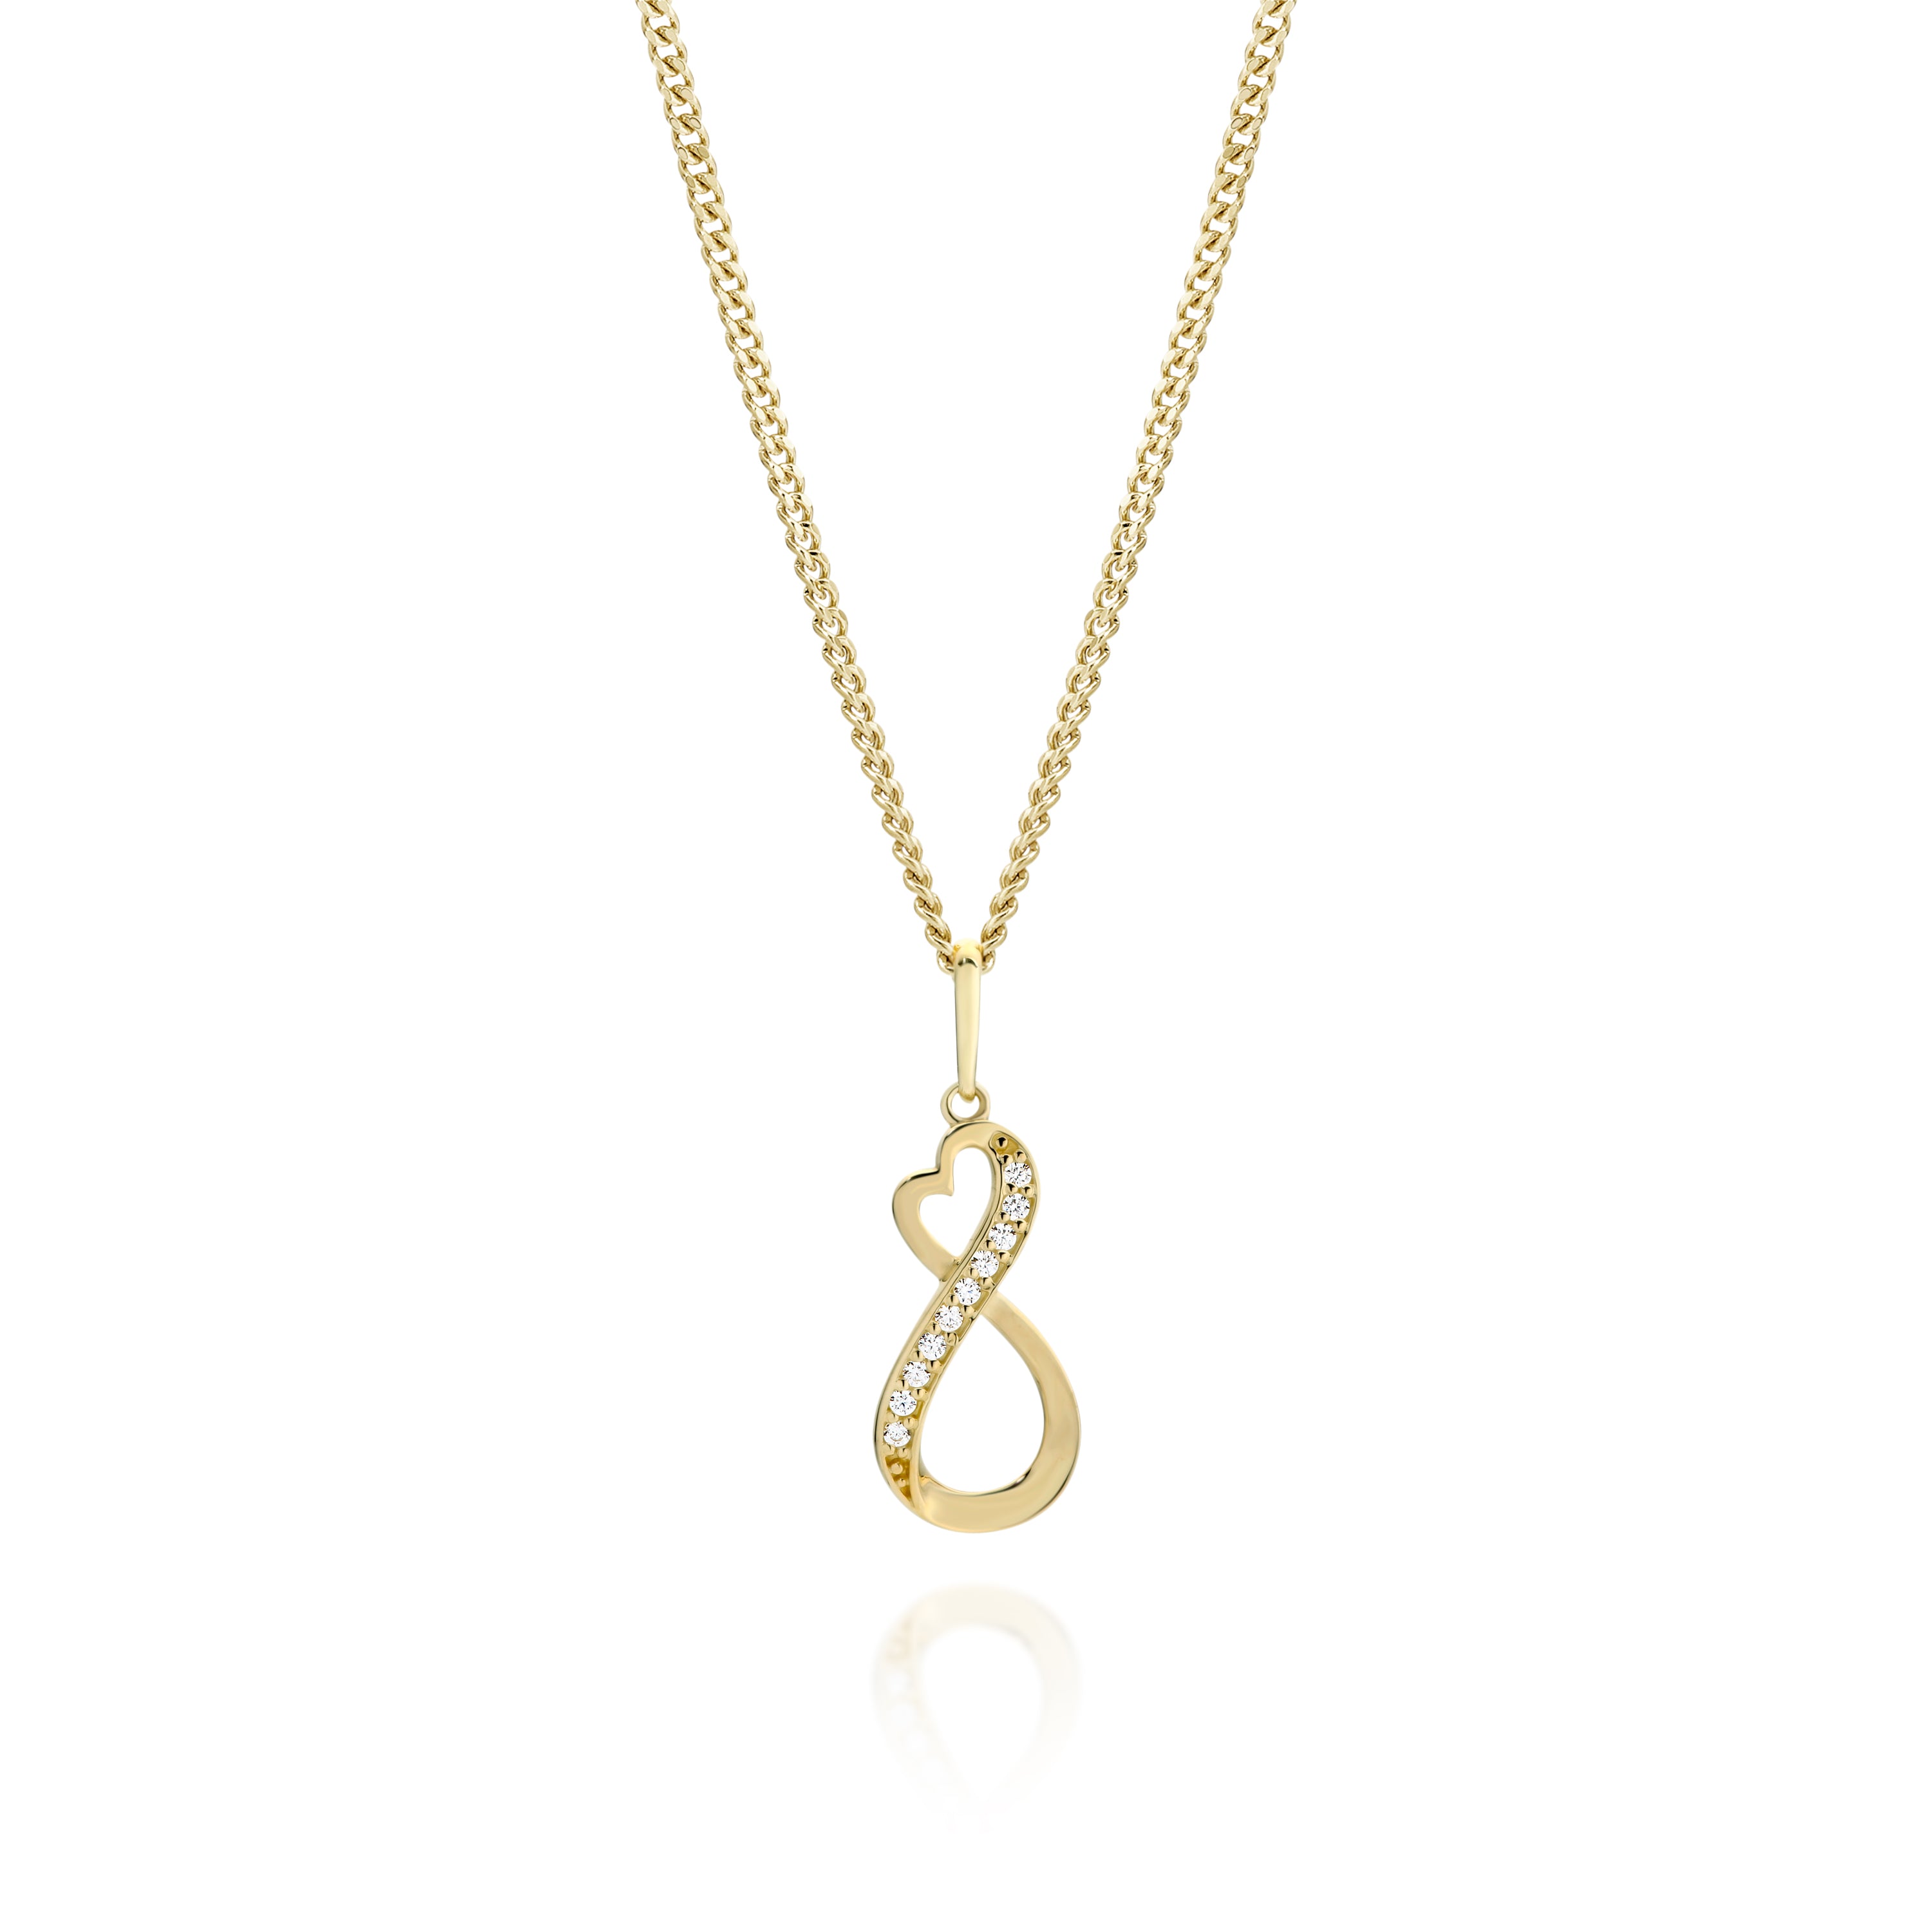 9ct gold infinity pendant